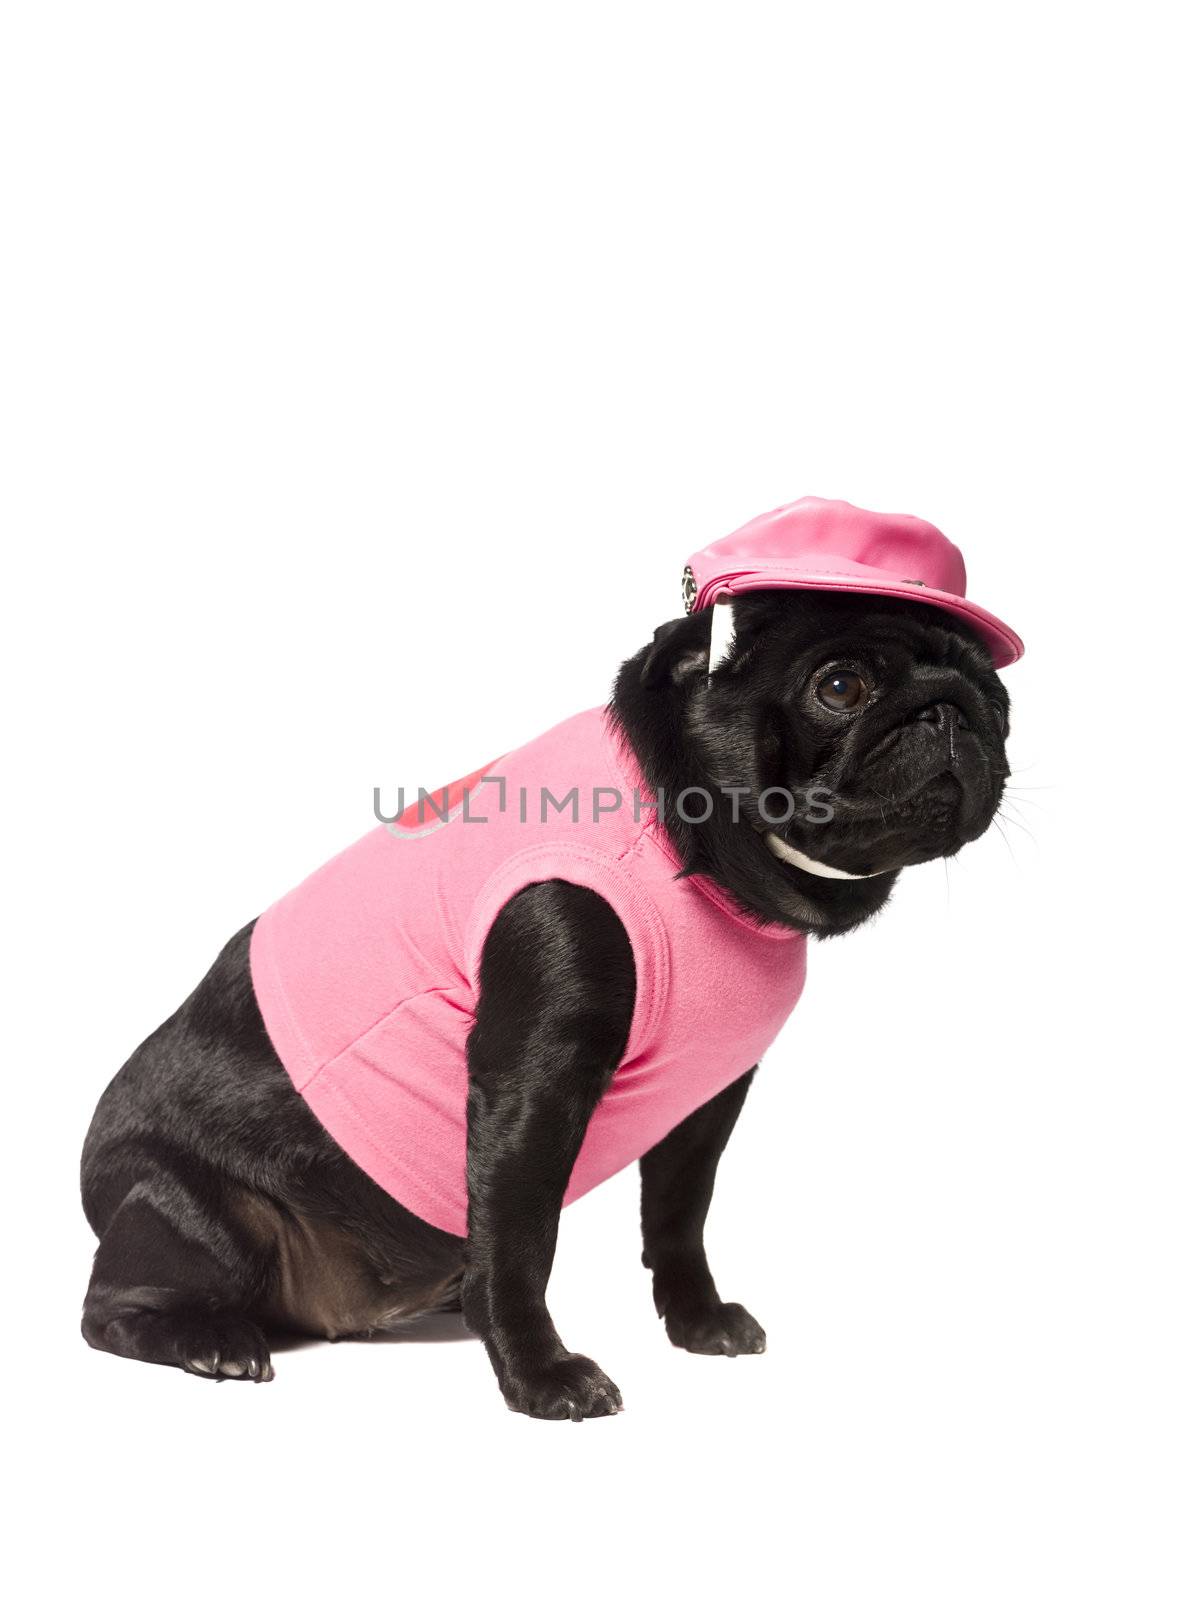 Dog dressed in pink  by gemenacom